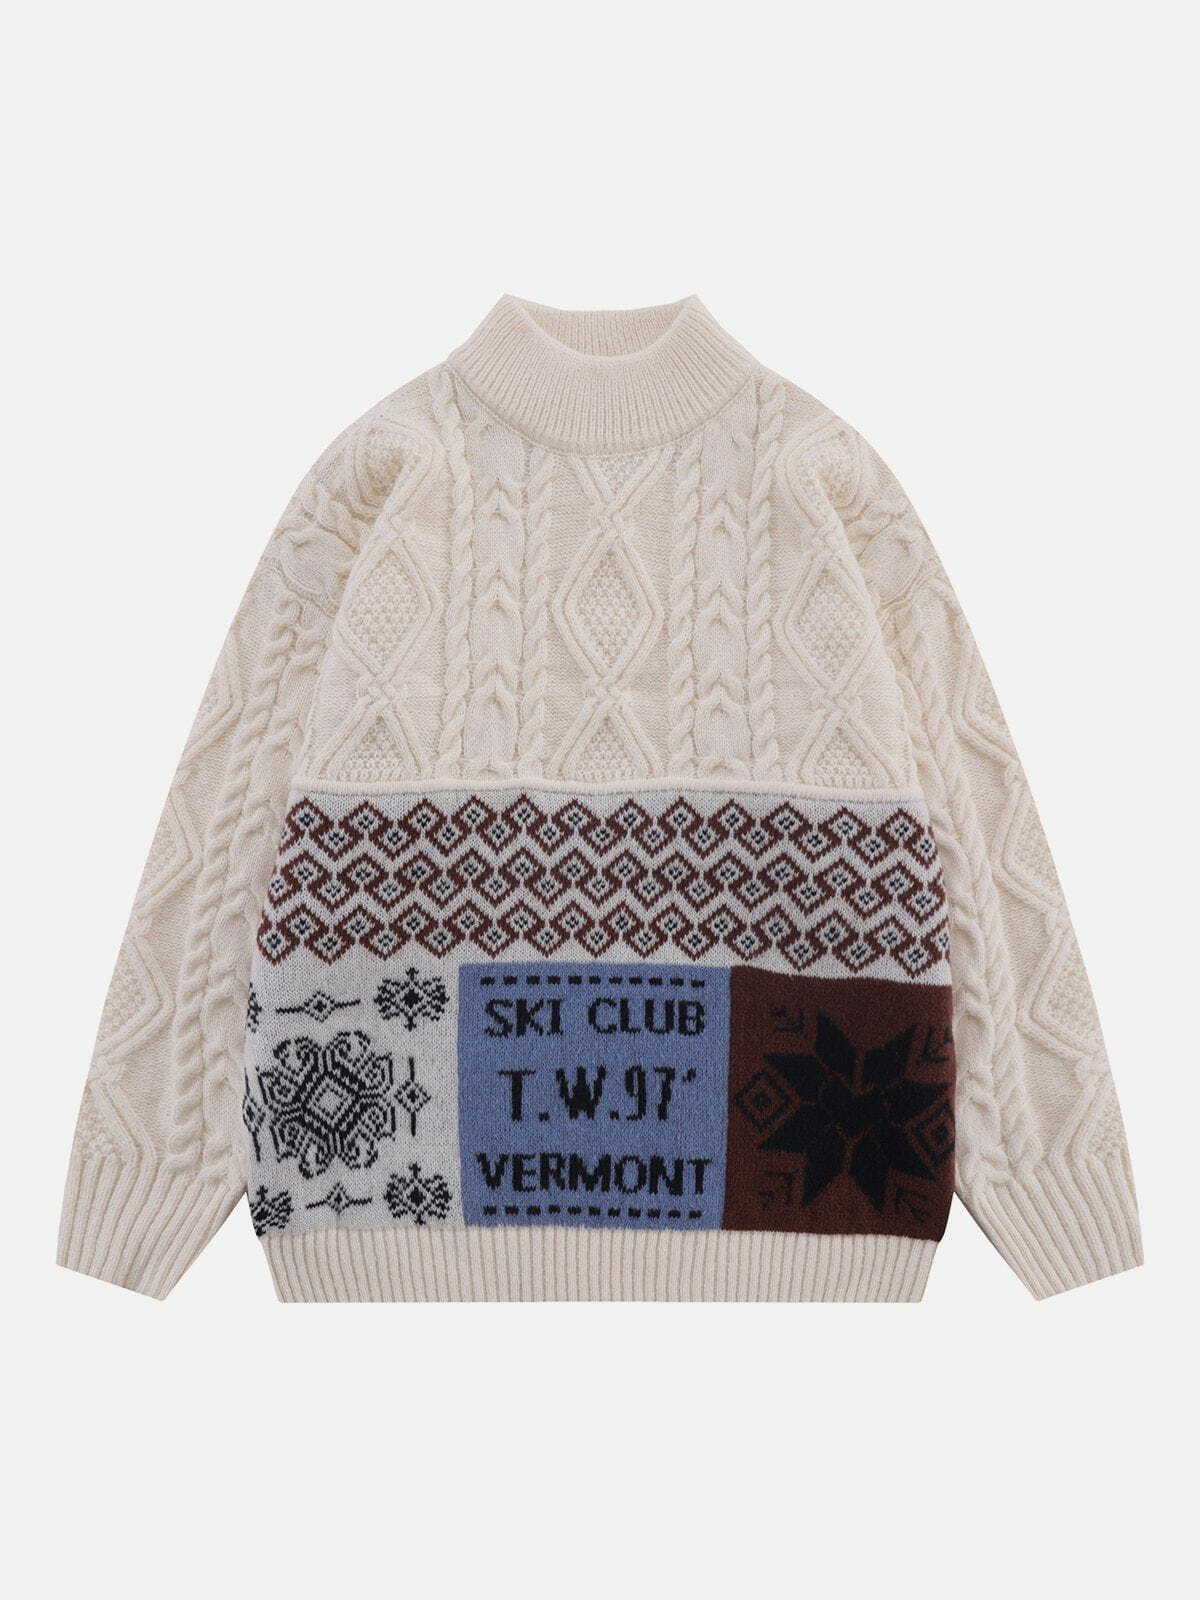 cozy twisted knit sweater retro comfort & urban chic 2680